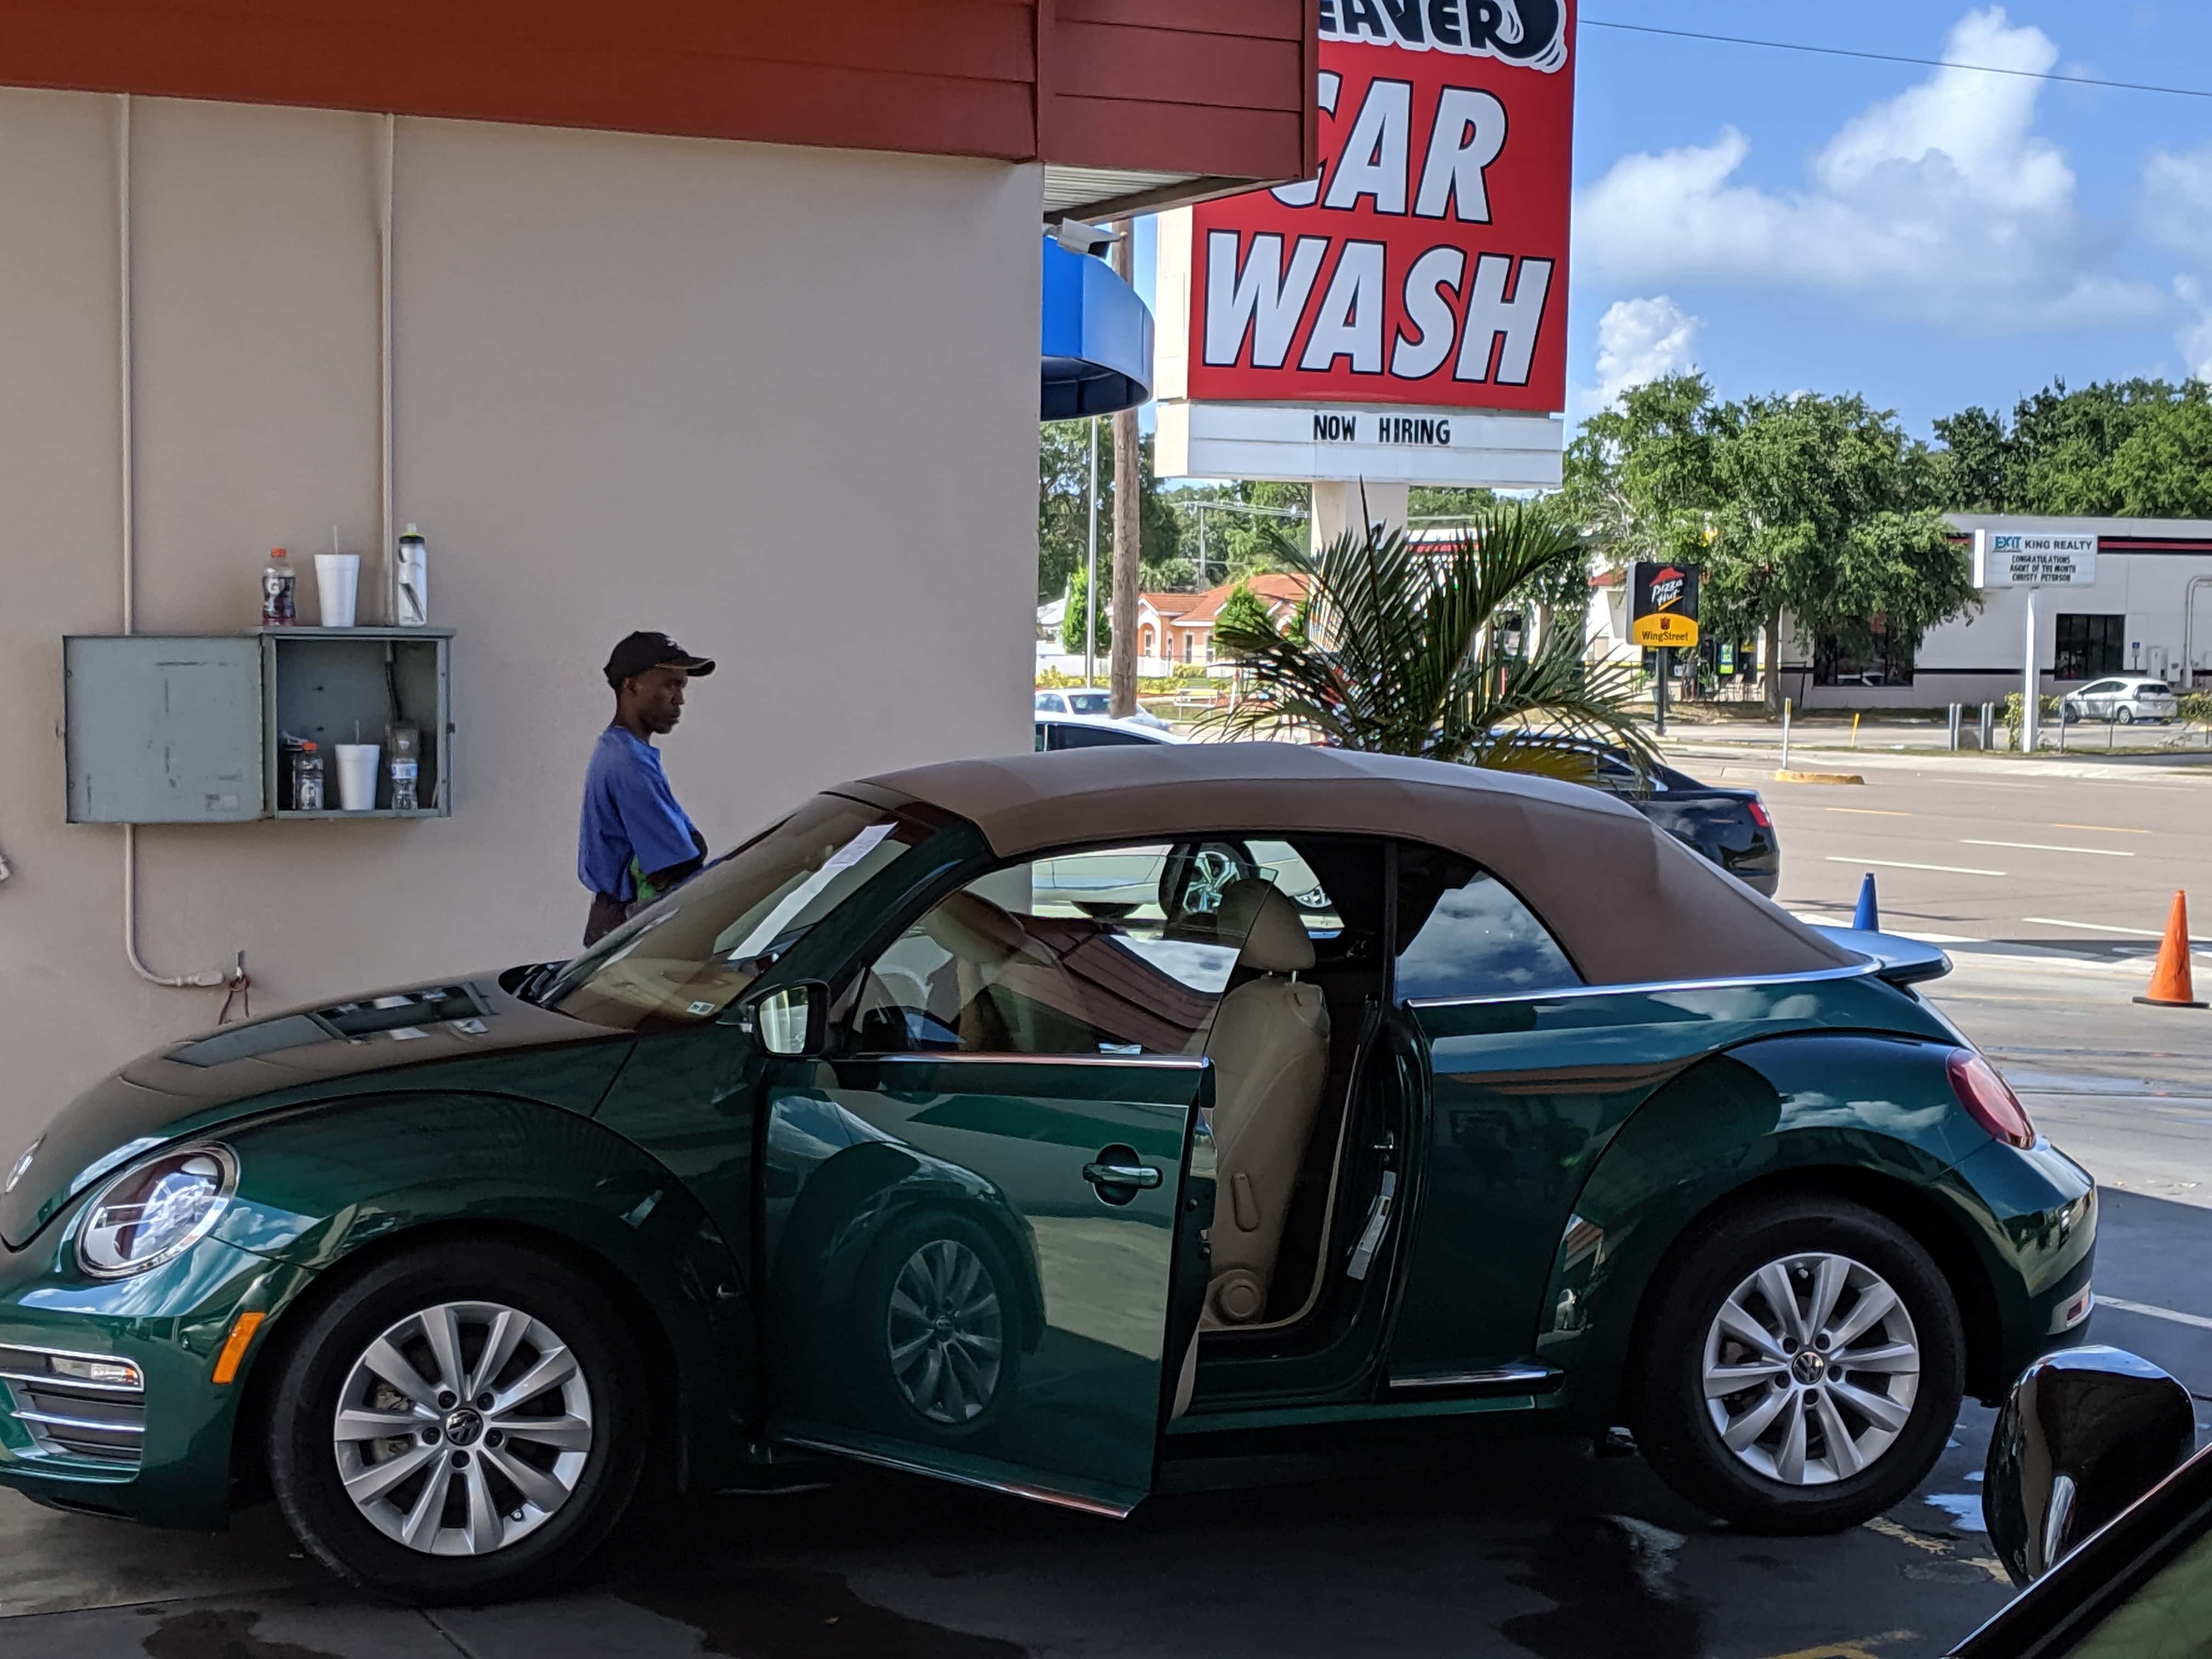 Eager Beaver Car Wash - Venice (FL 34293), US, self service car wash near me